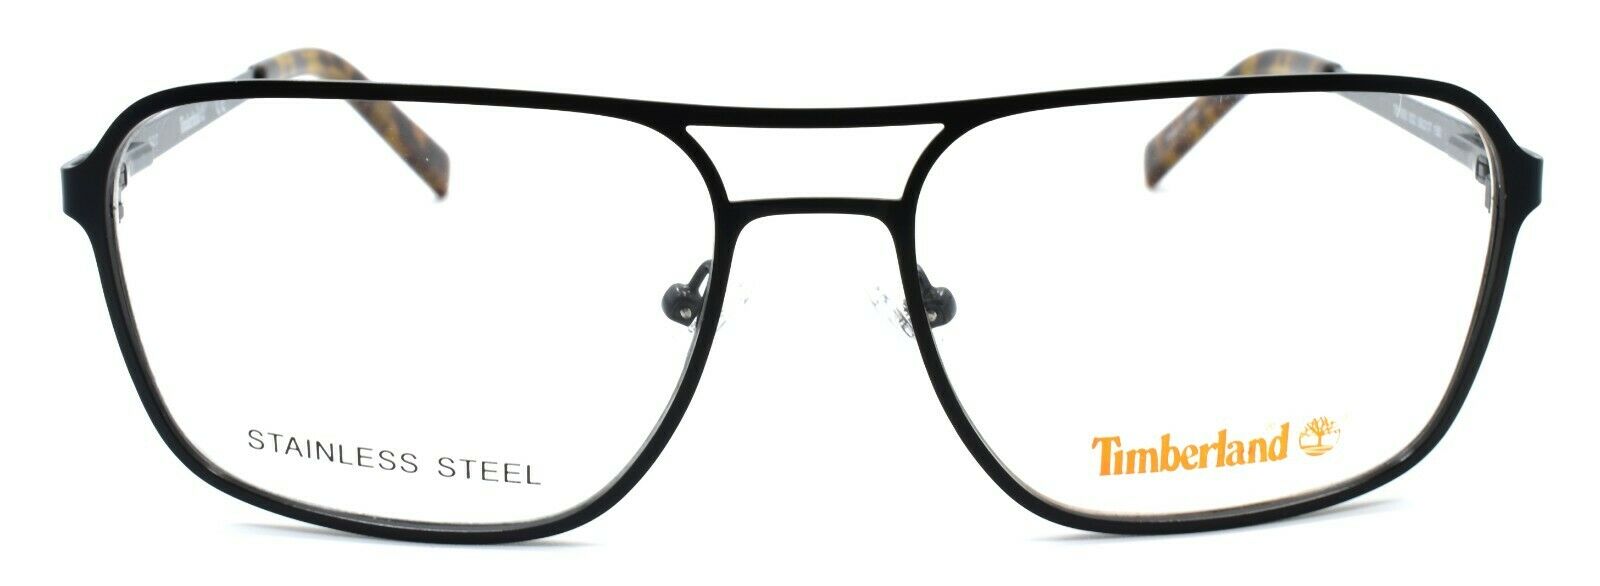 2-TIMBERLAND TB1593 002 Men's Eyeglasses Frames Aviator 58-17-150 Matte Black-664689979745-IKSpecs